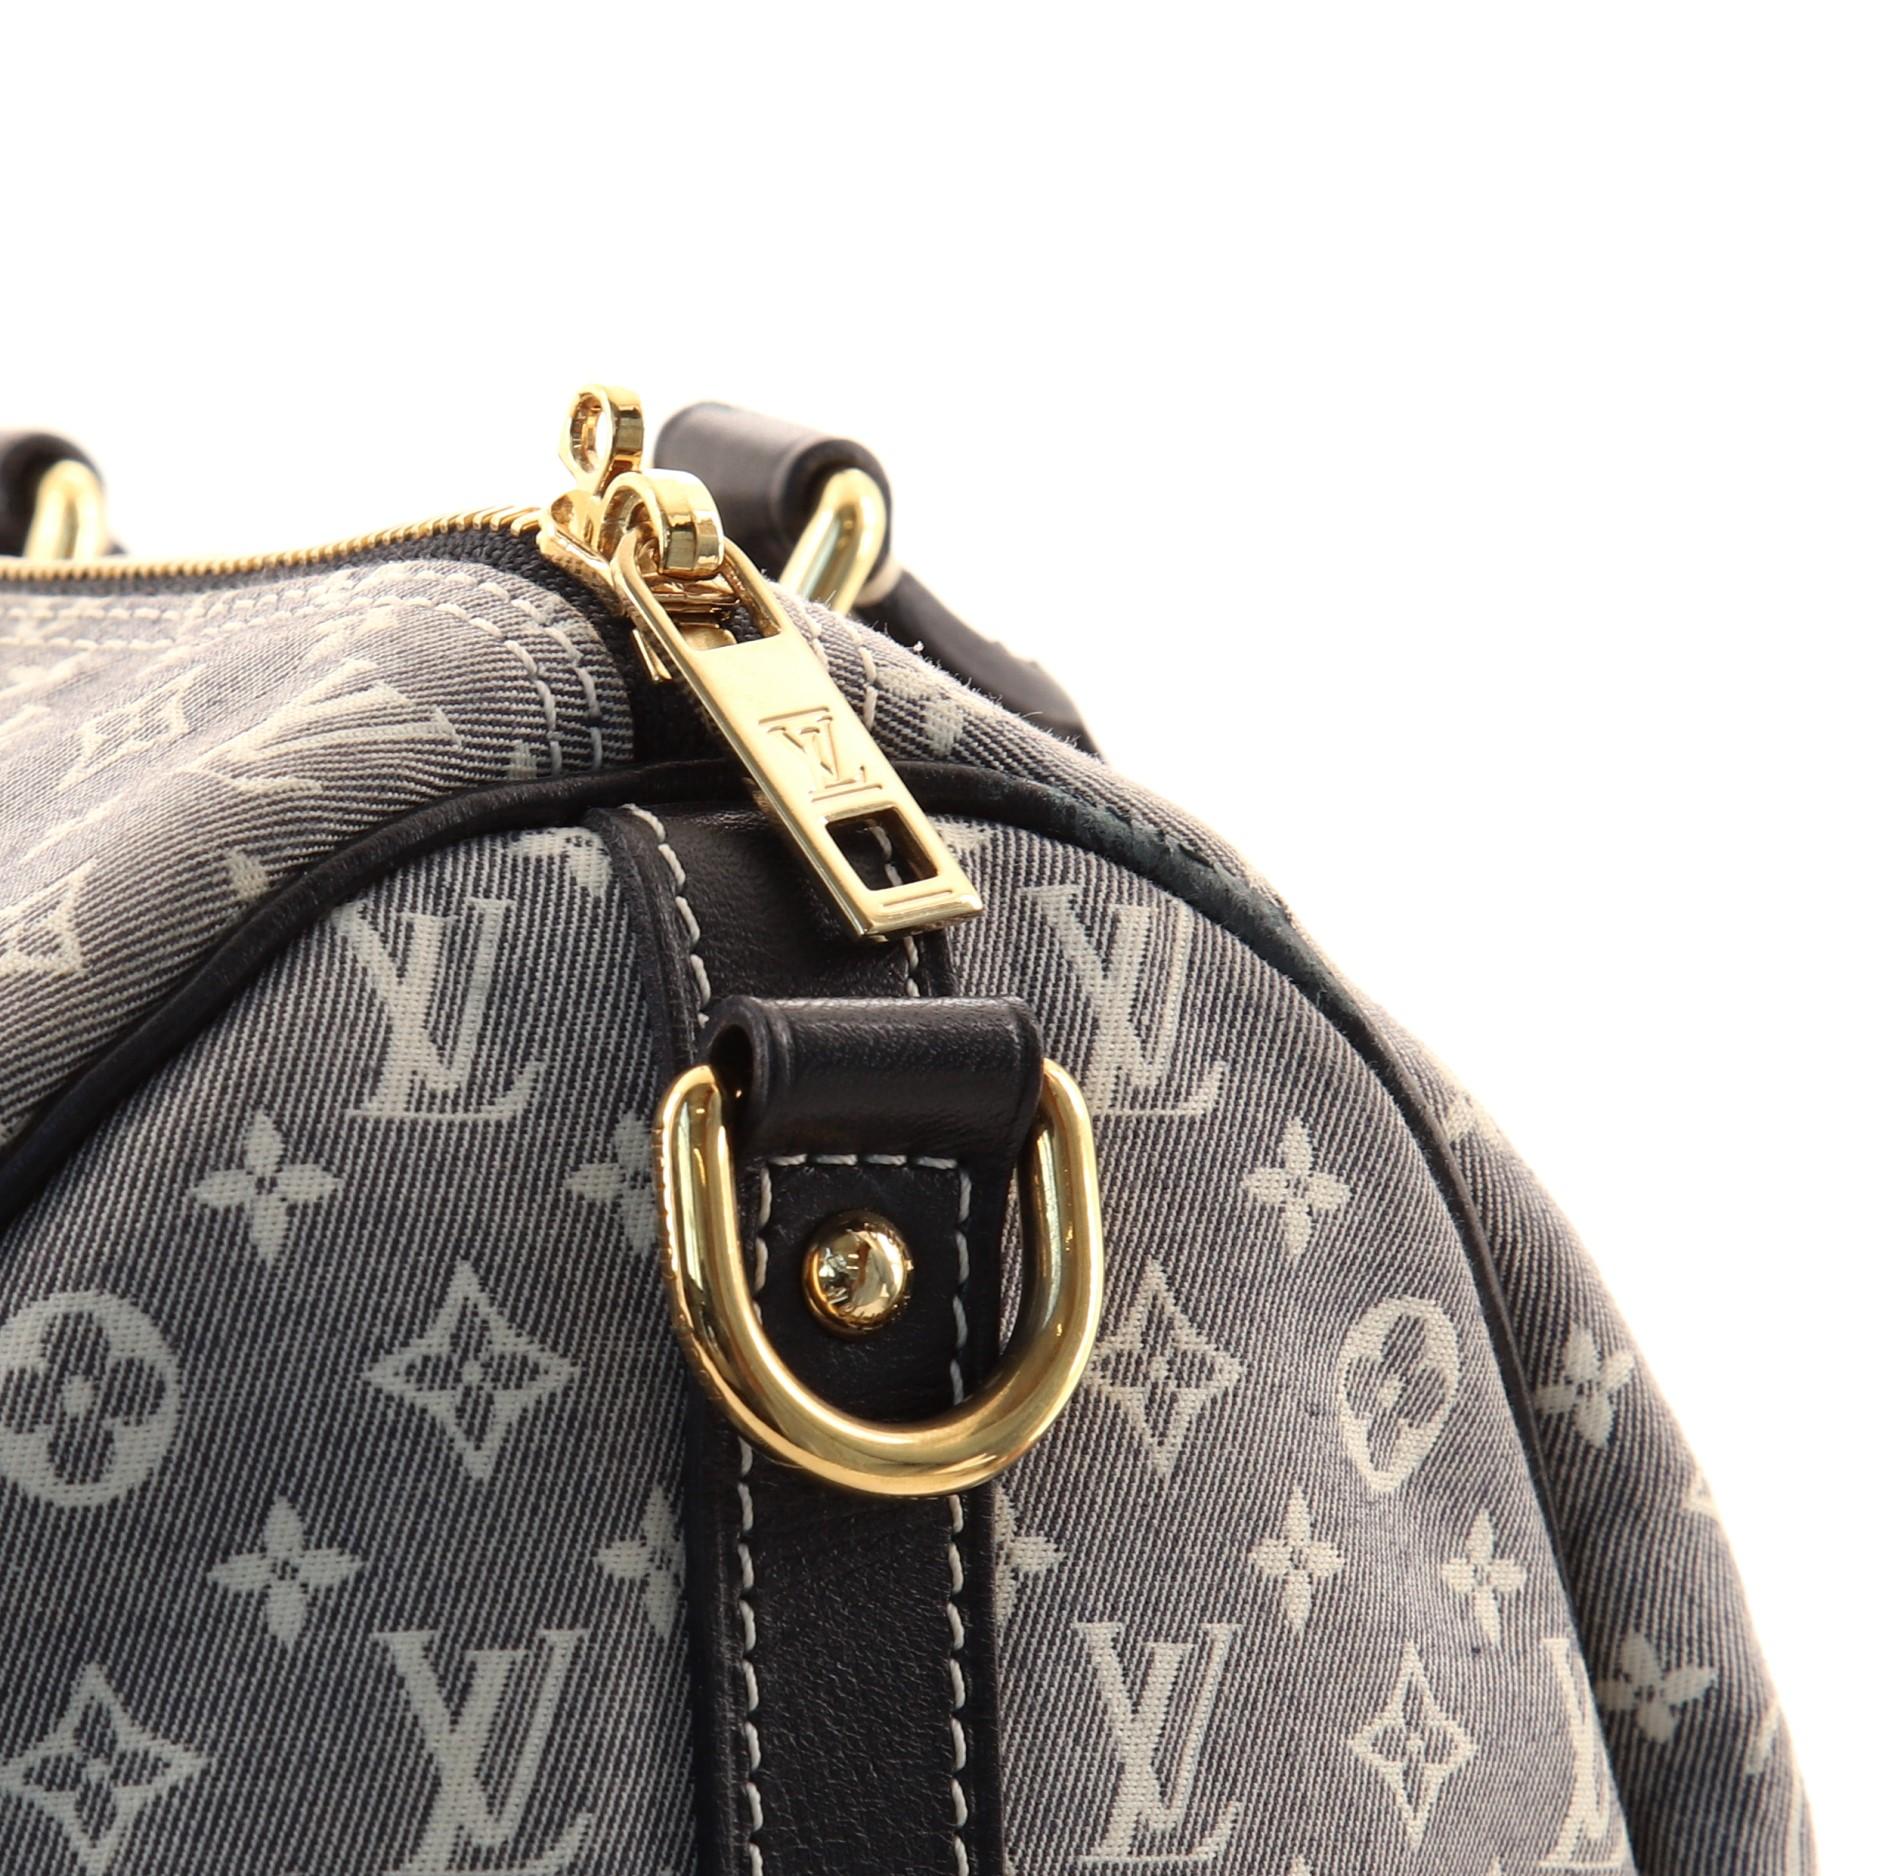 Women's or Men's Louis Vuitton Speedy Bandouliere Bag Mini Lin 30